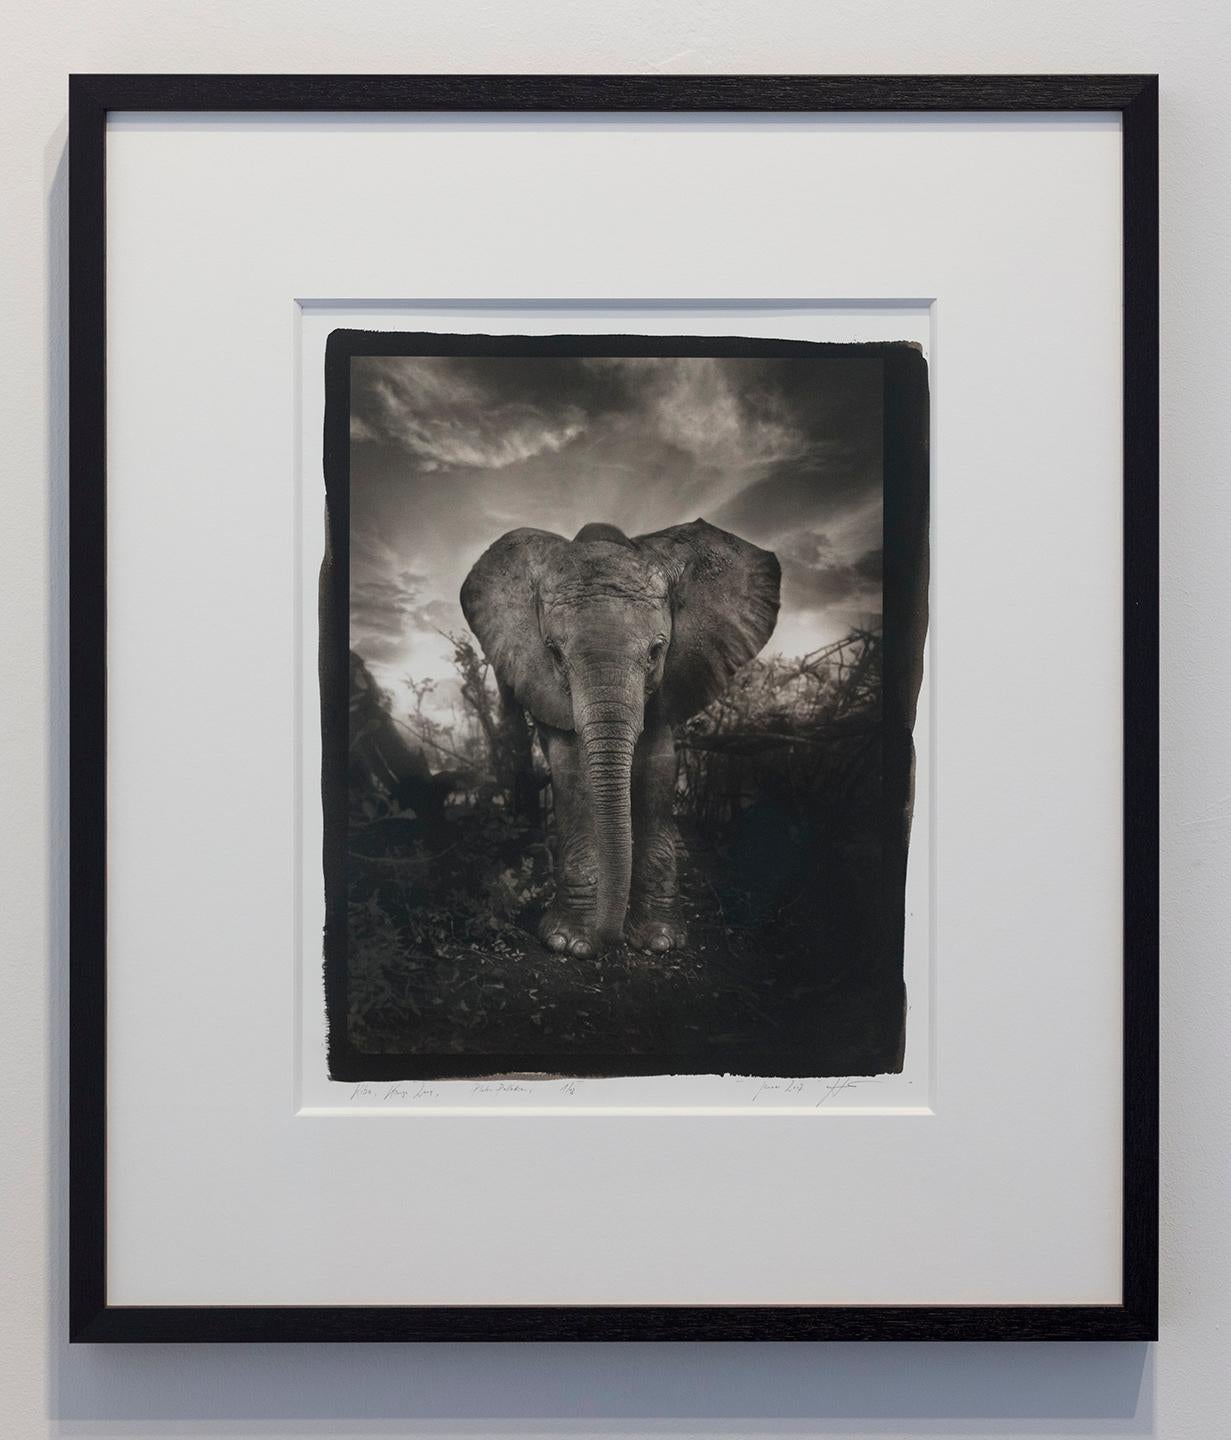 Kibo - Platinum Palladium Print, Elephant, black and white photography, wildlife - Photograph by Joachim Schmeisser